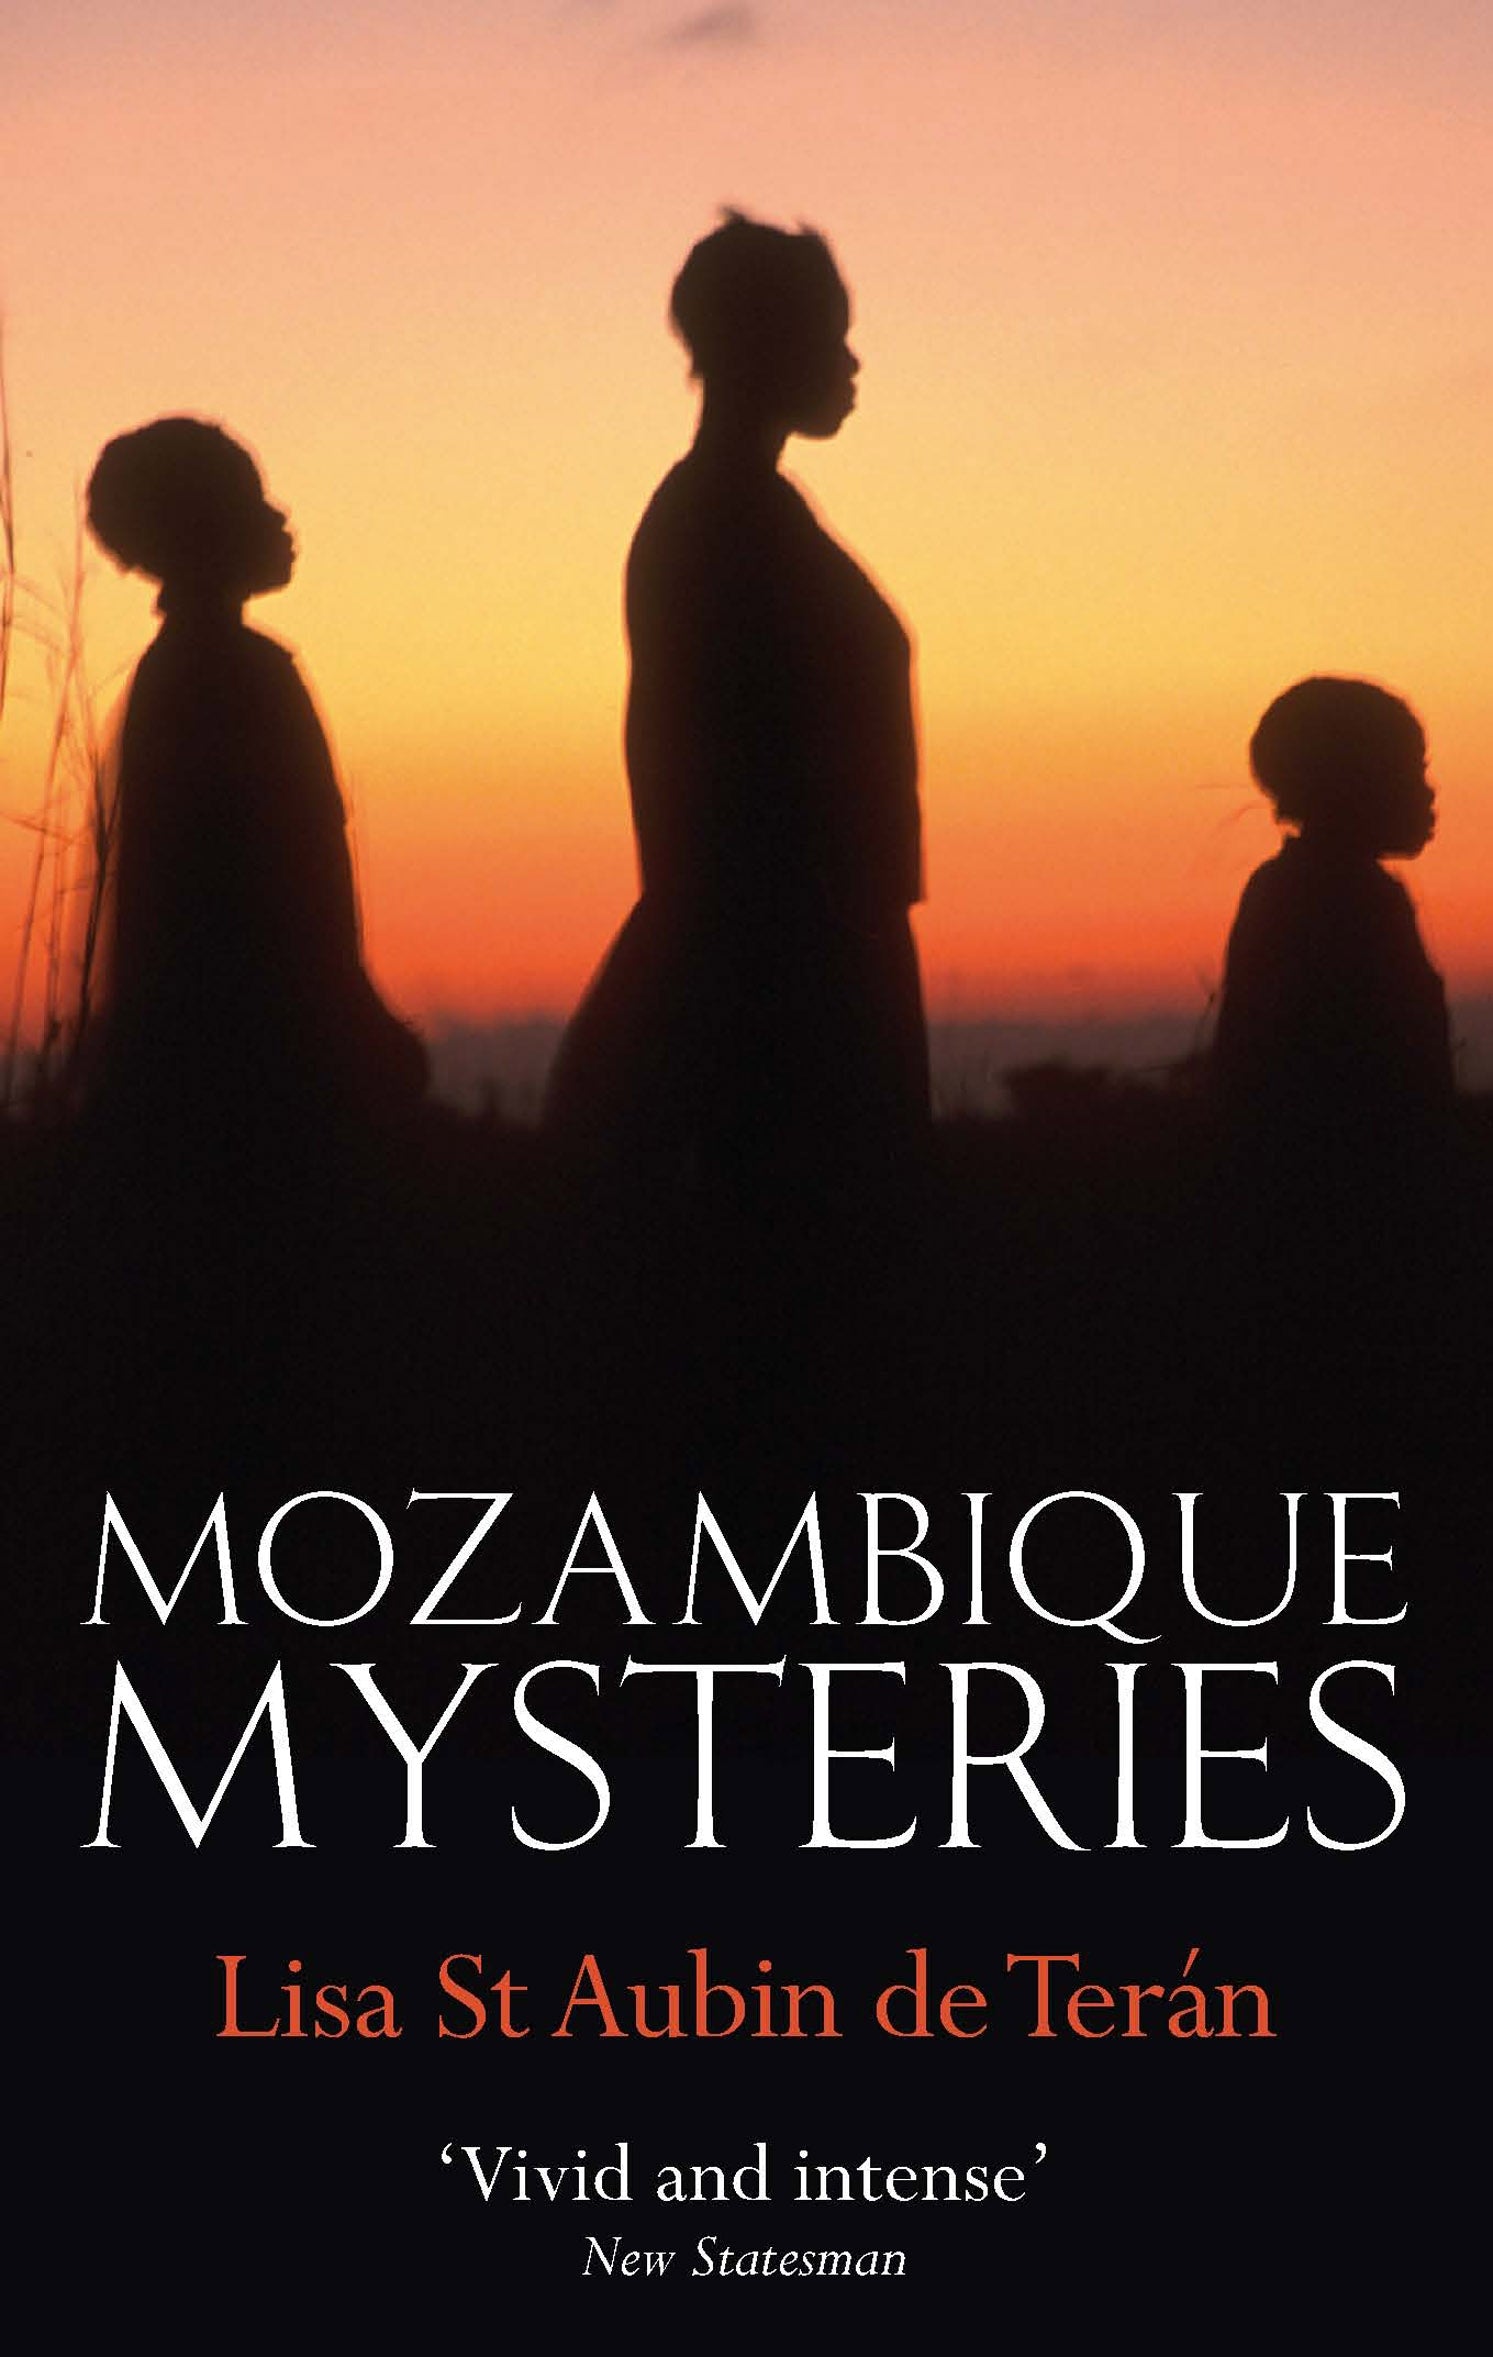 Mozambique Mysteries by Lisa St. Aubin De Teran